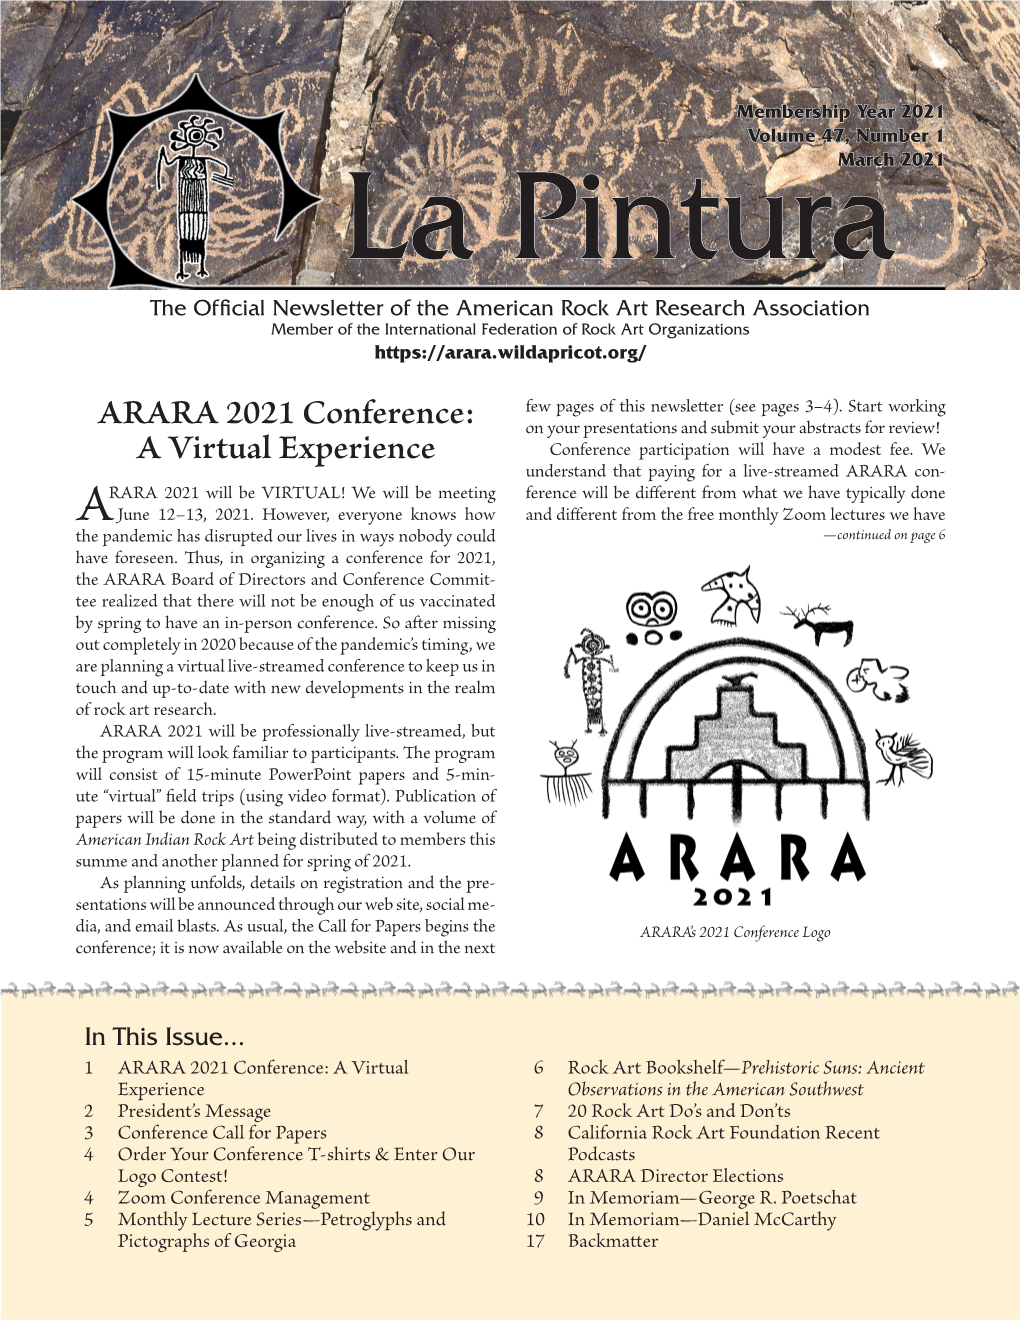 ARARA 2021 Conference: a Virtual Experience